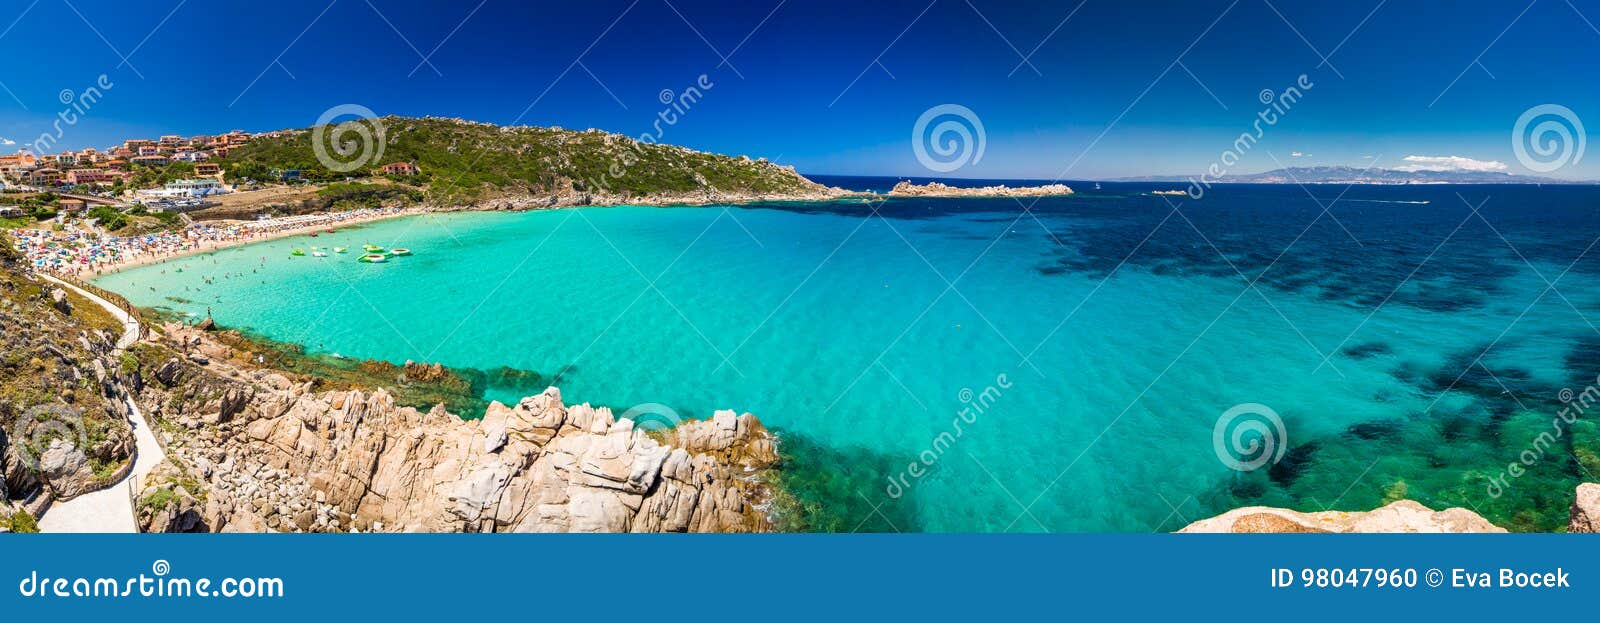 spiaggia di rena bianca beach with red rocks and azure clear water, santa terasa gallura, costa smeralda, sardinia, italy